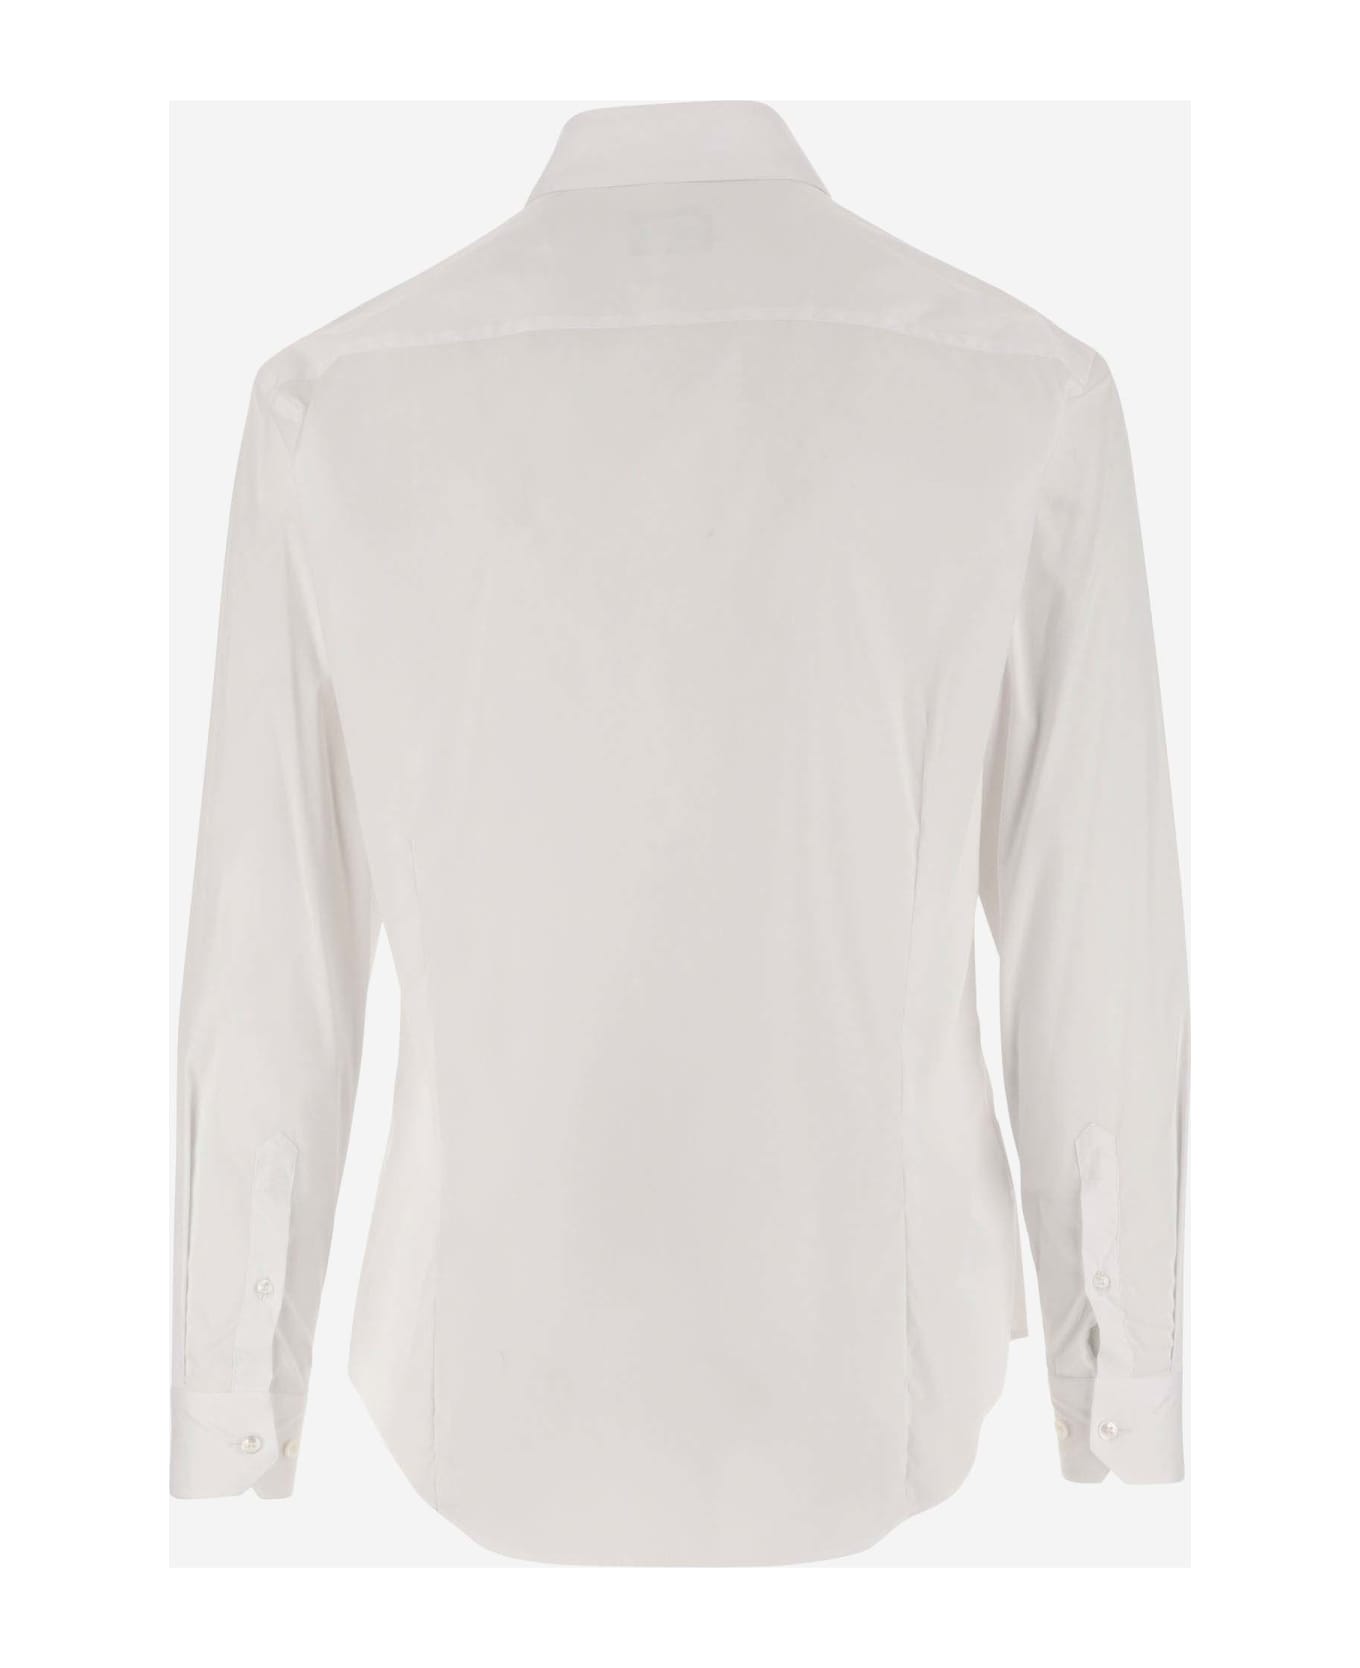 Giorgio Armani Stretch Cotton Blend Shirt - BRILLIANT WHITE